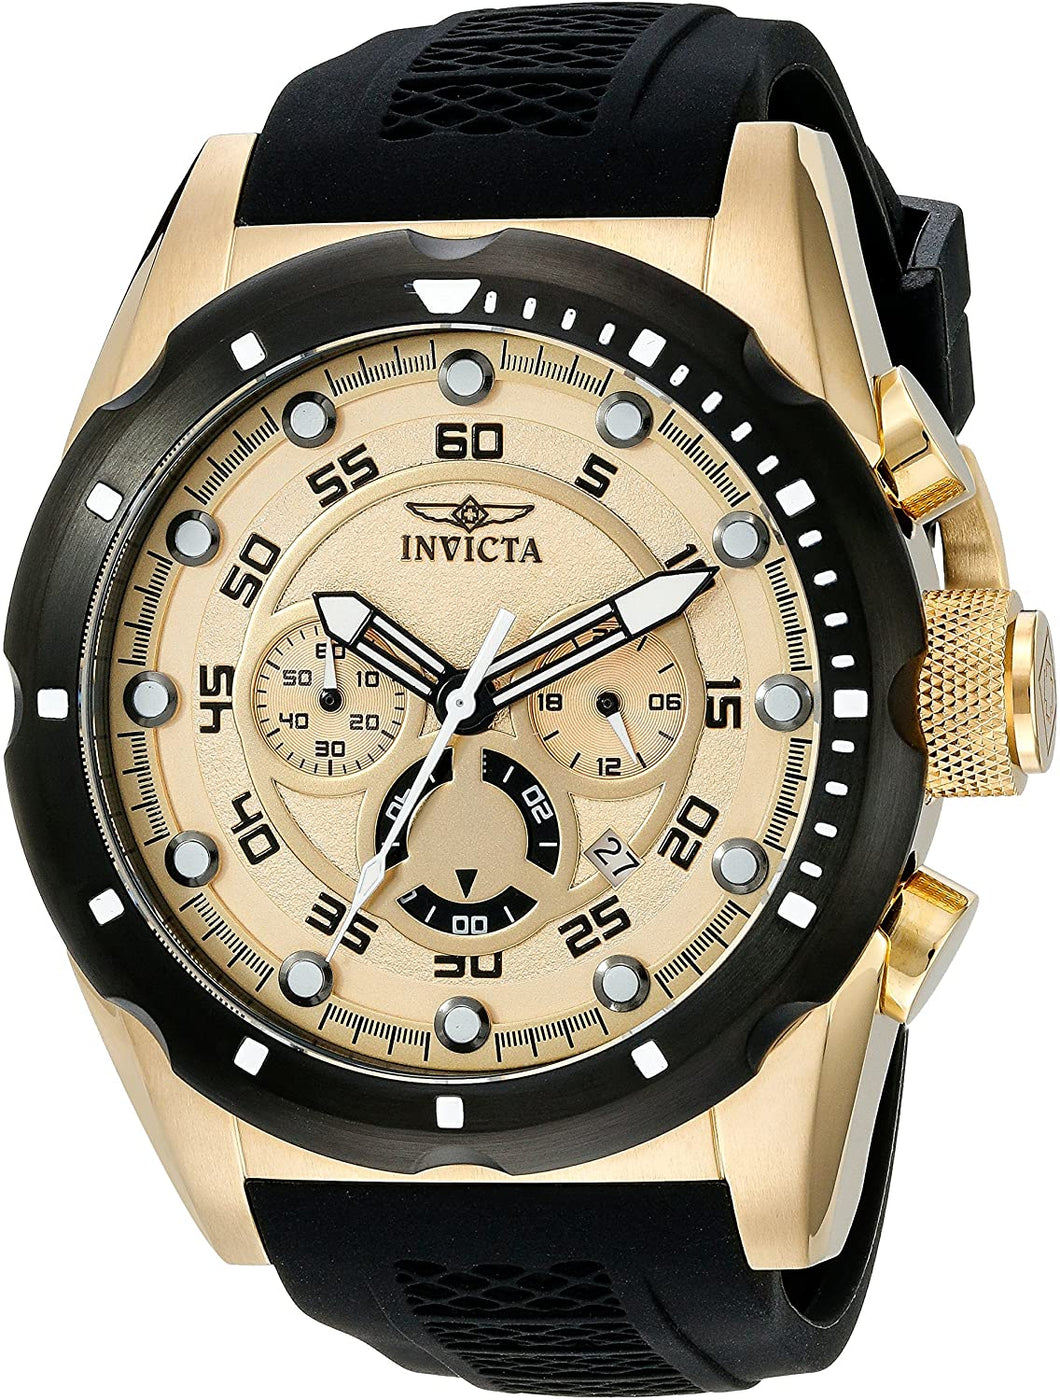 Invicta Men's 20306 Speedway Analog Display Japanese Quartz Black Watch